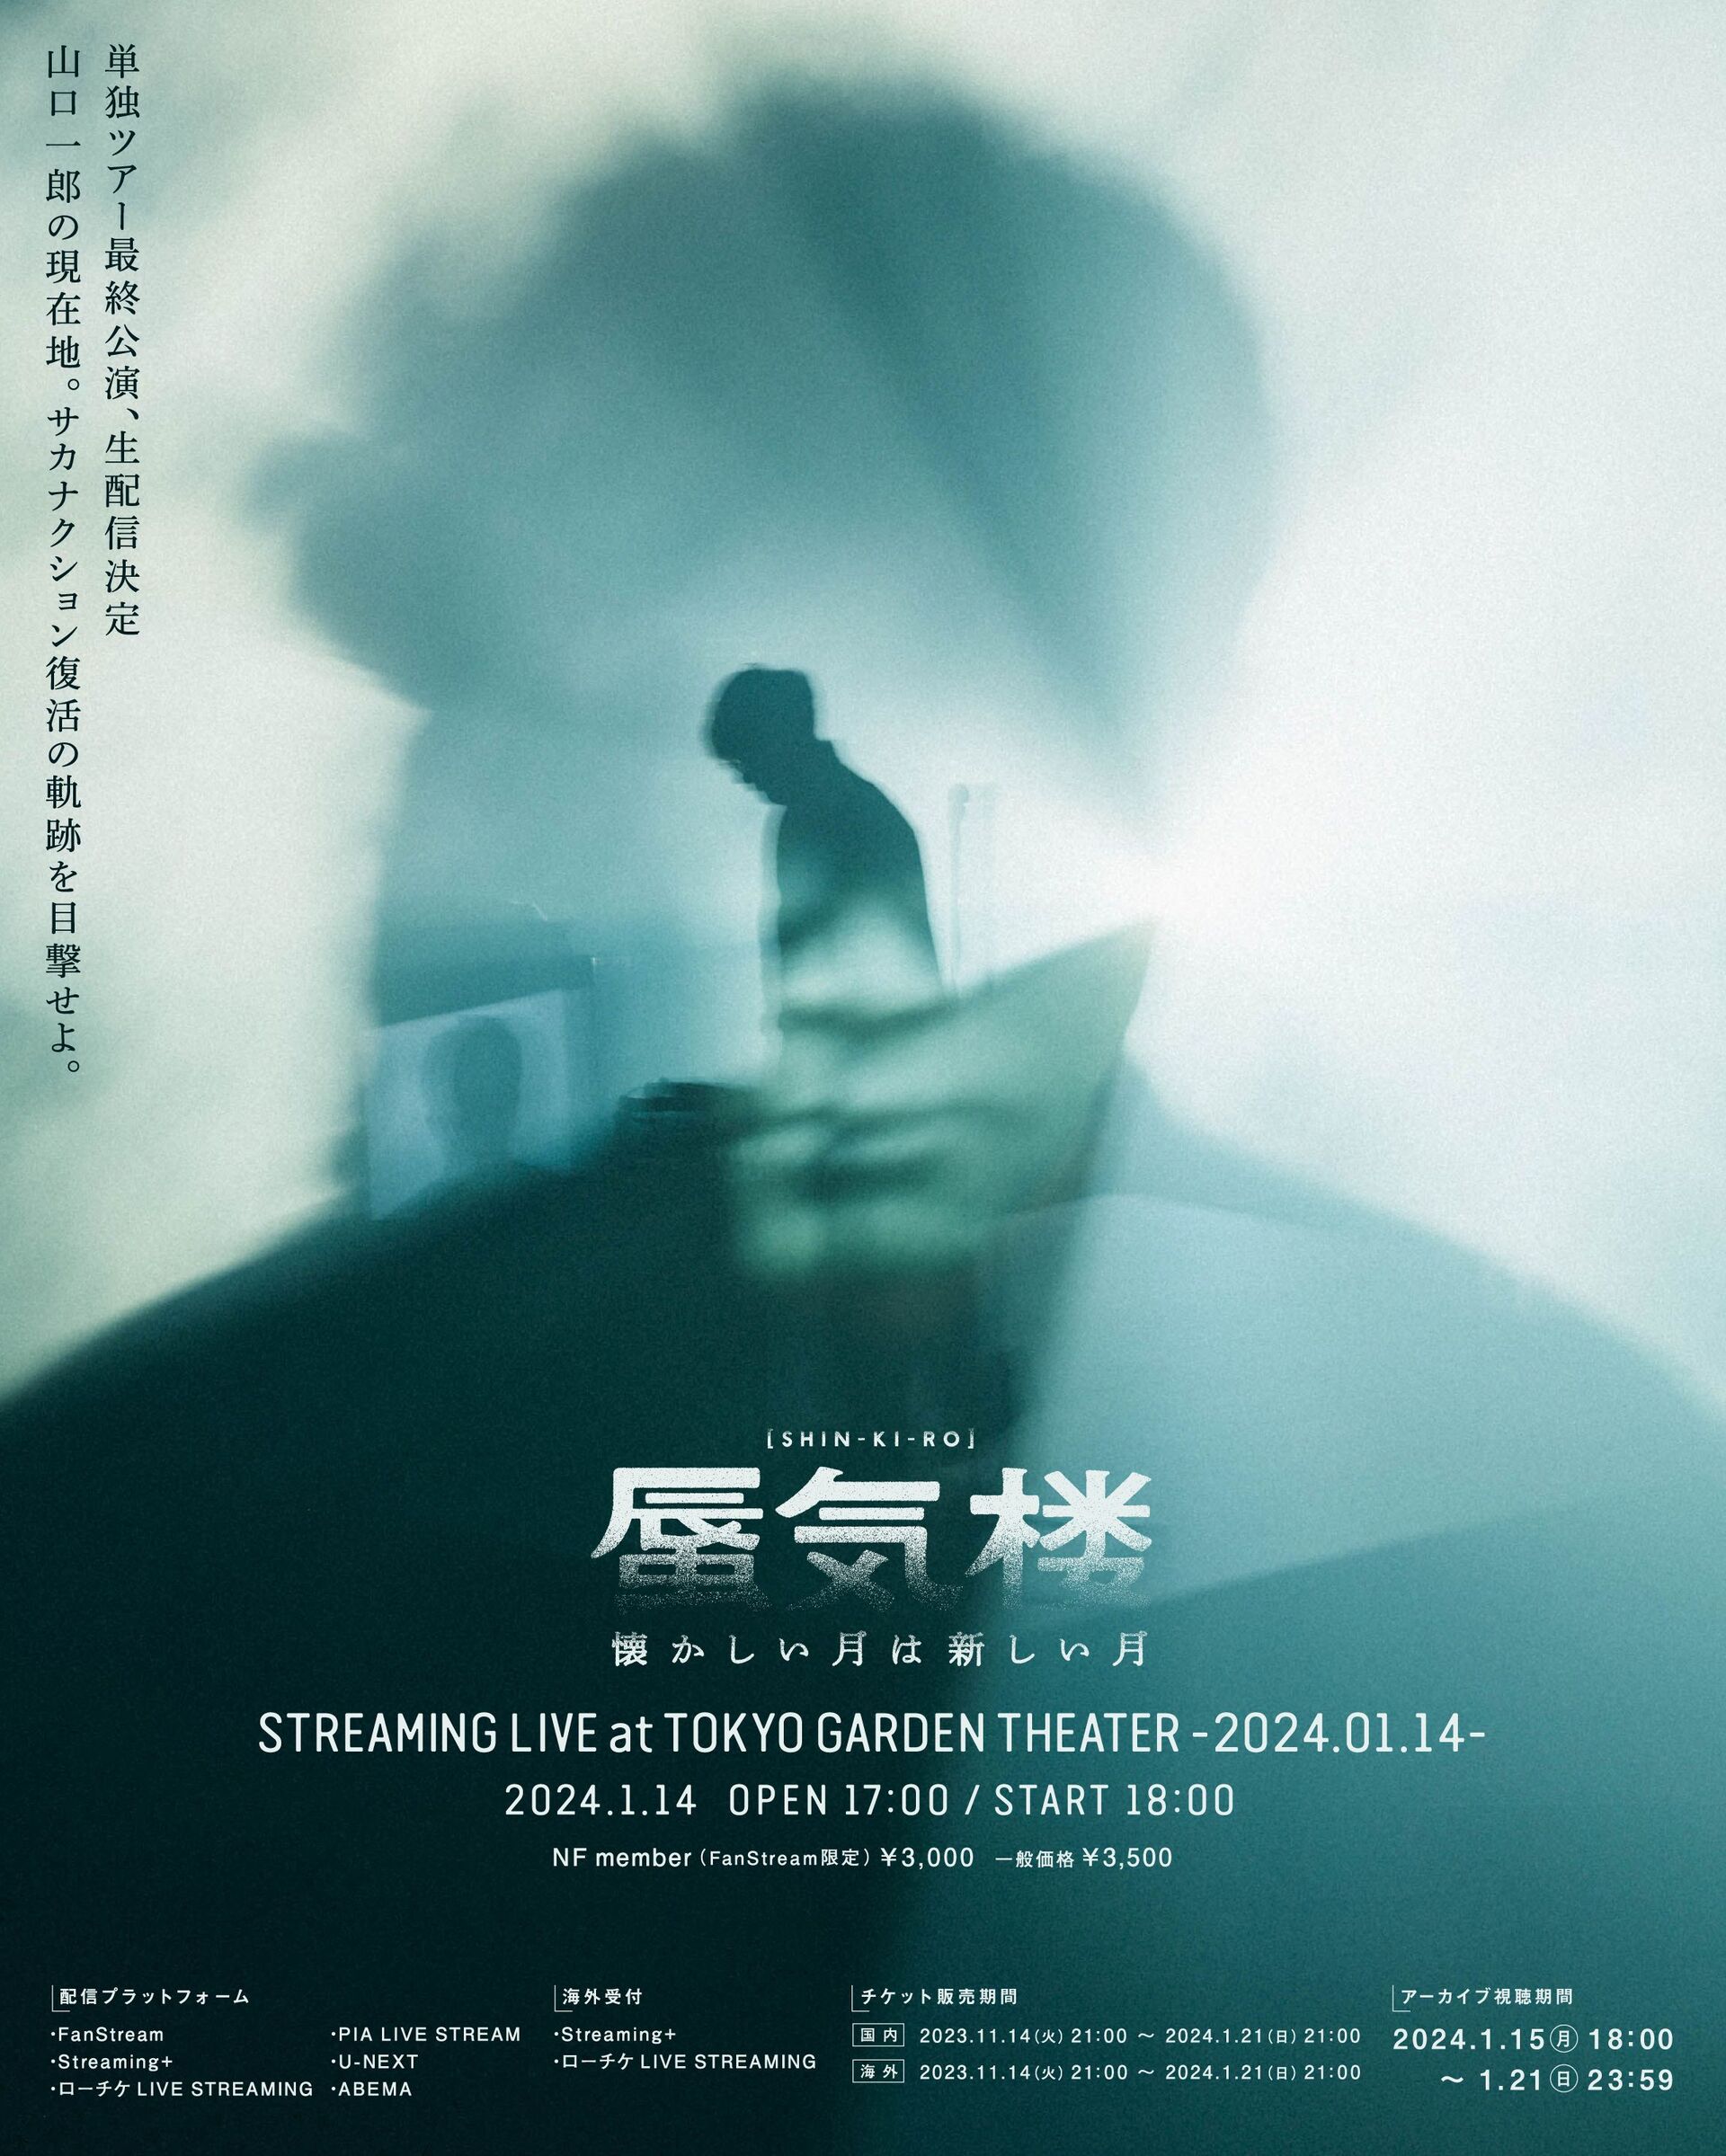 NFmember [Streaming+] ICHIRO YAMAGUCHI (SAKANACTION) STREAMING LIVE at TOKYO GARDEN THEATER ー2024.01.14ー